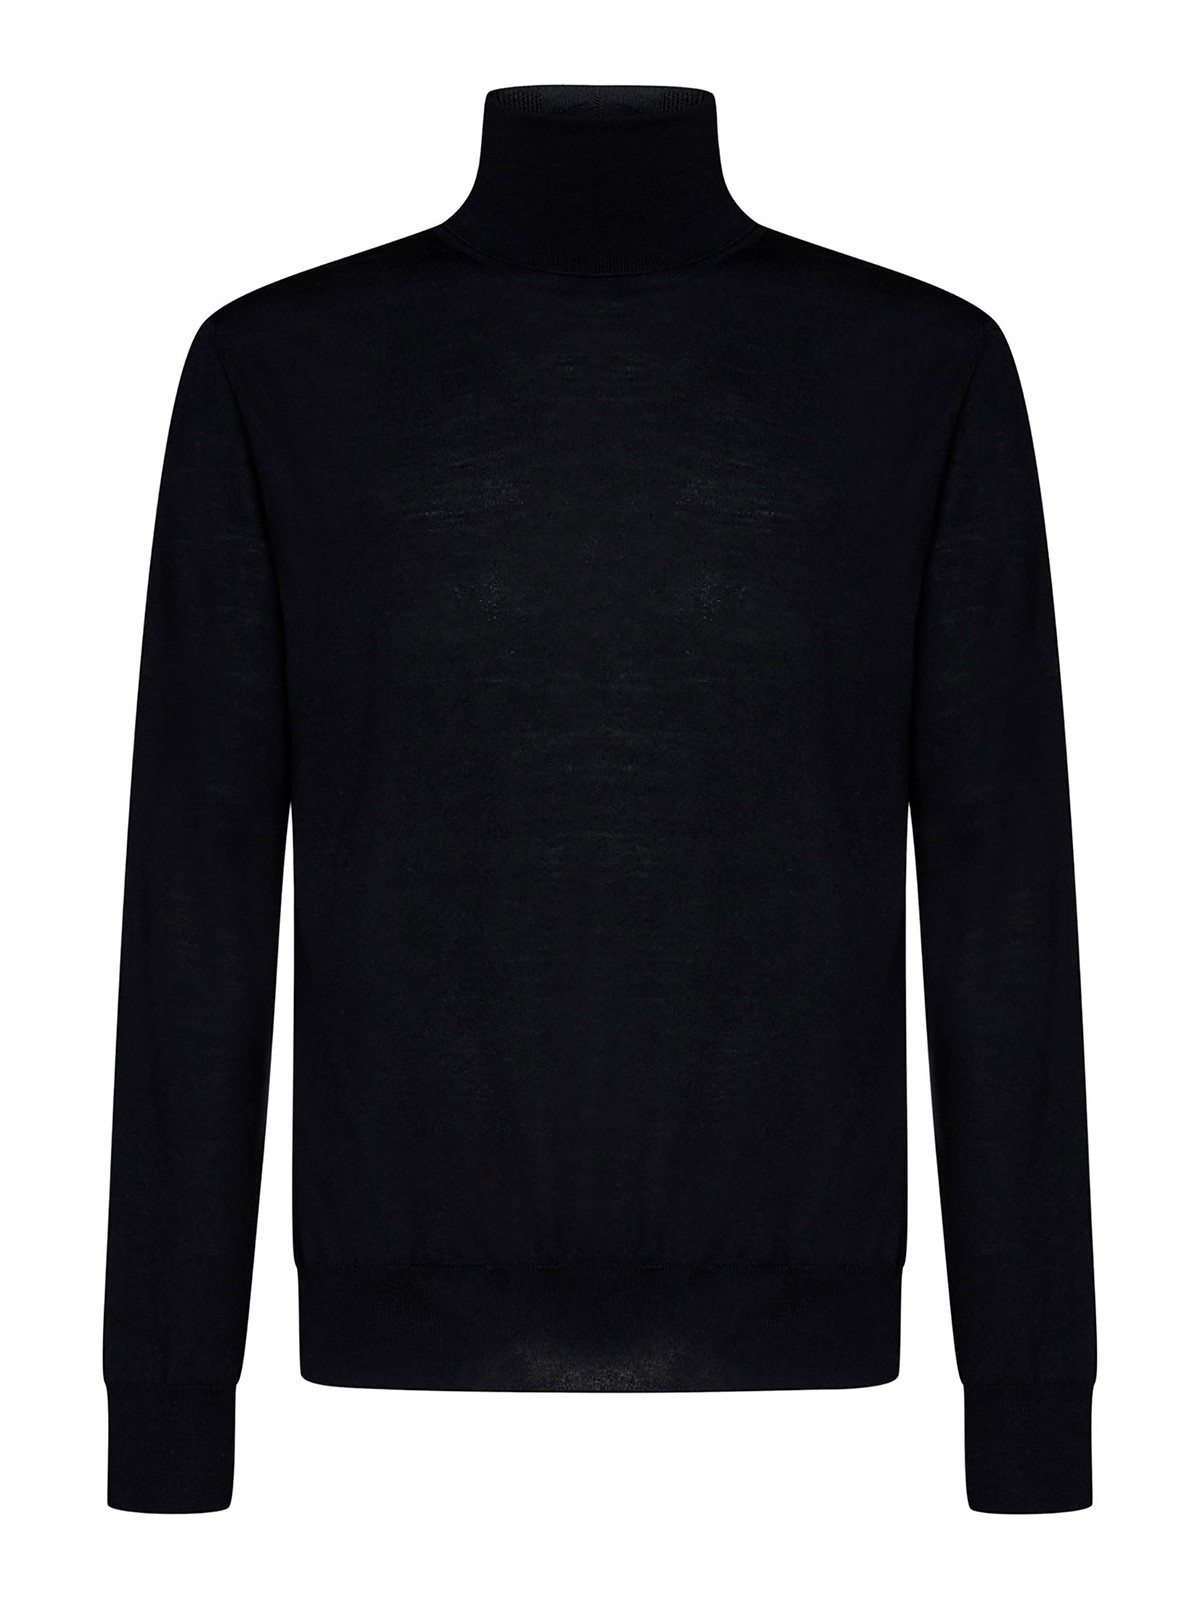 Jil Sander Superfine Wool Turtleneck Sweater In Black